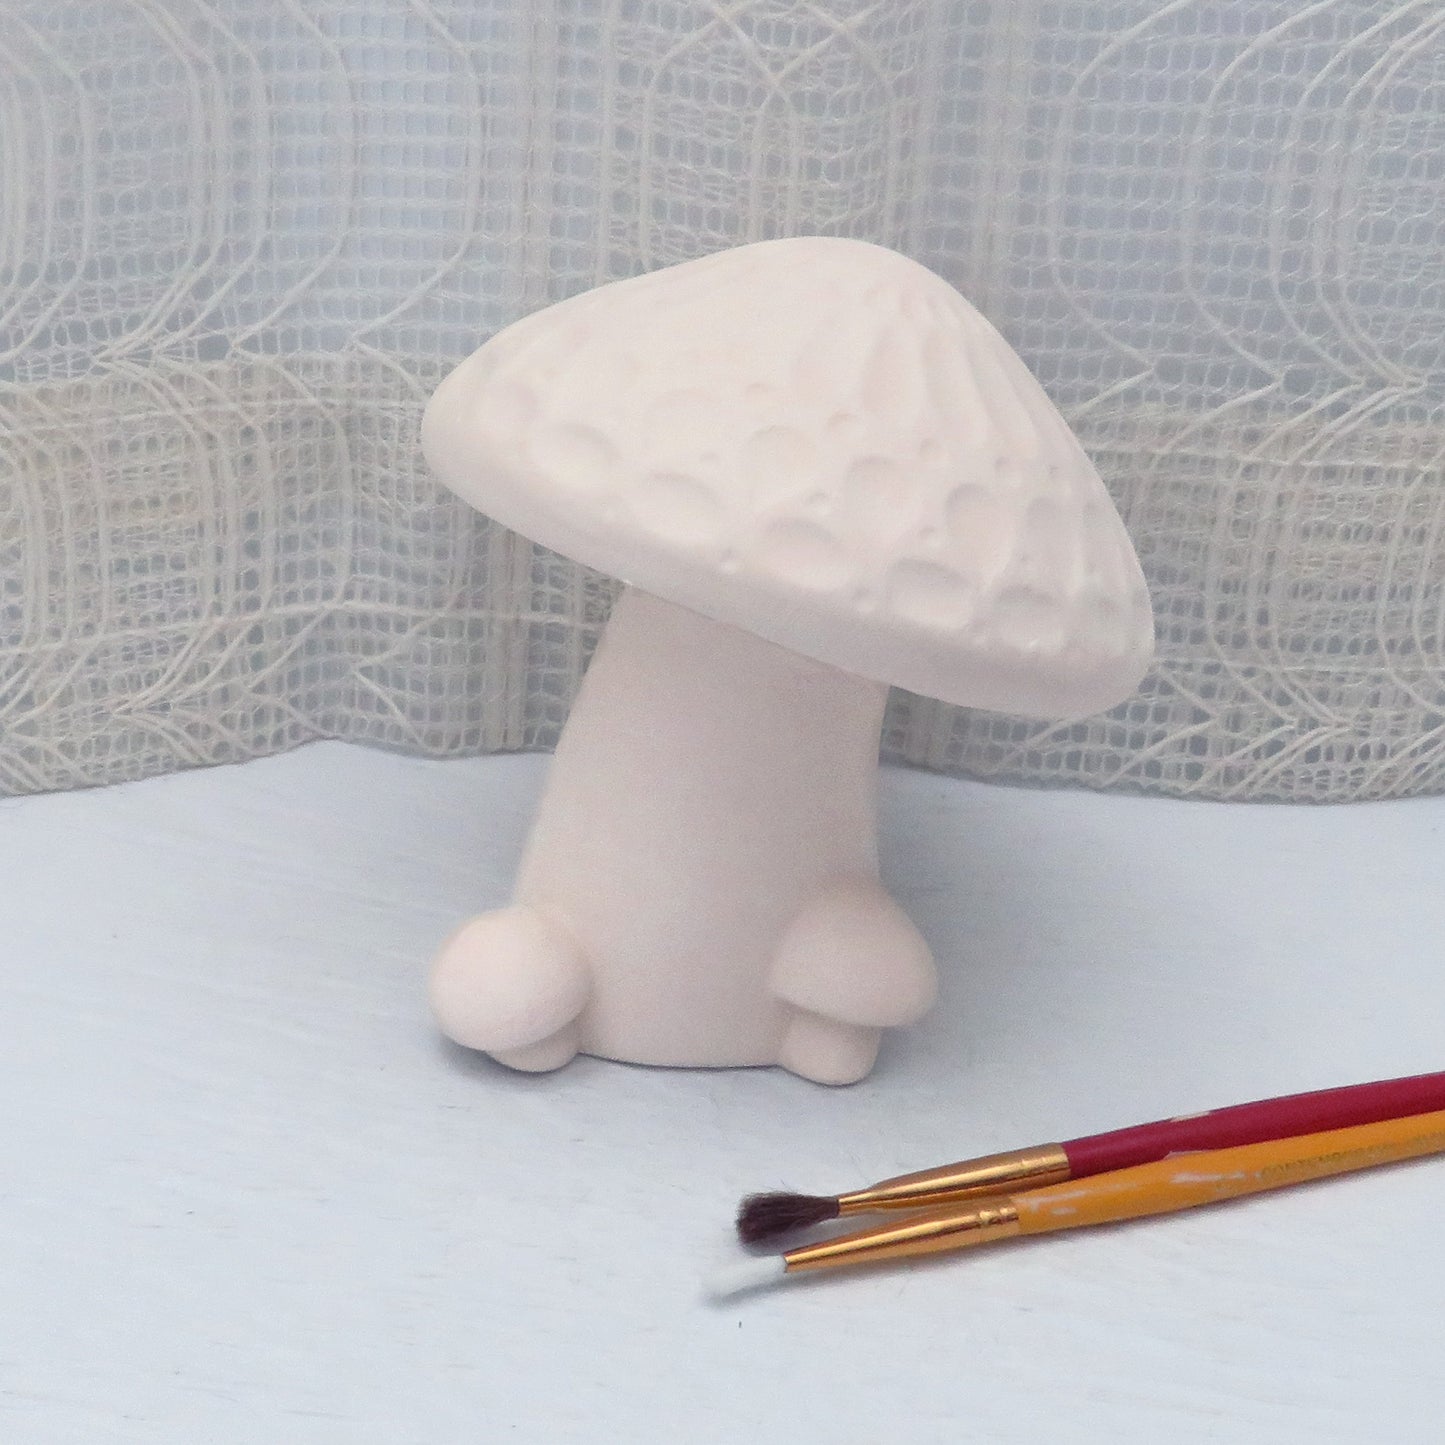 Handmade Ready to Paint Ceramic Mushroom Figurine, Ceramics to Paint, Paintable Ceramic Mushroom Statue, Housewarming Gift